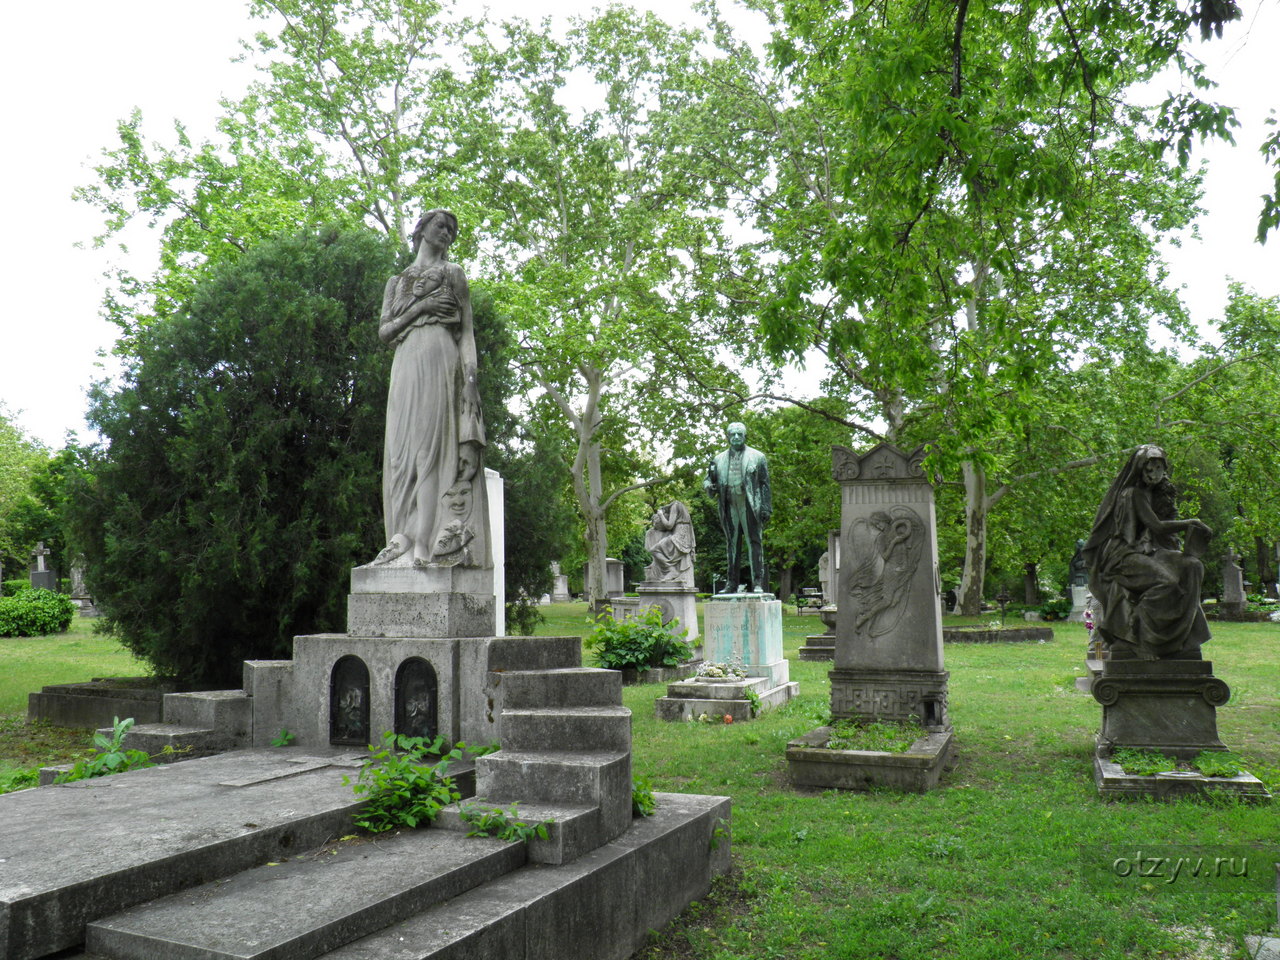 кладбище в венгрии